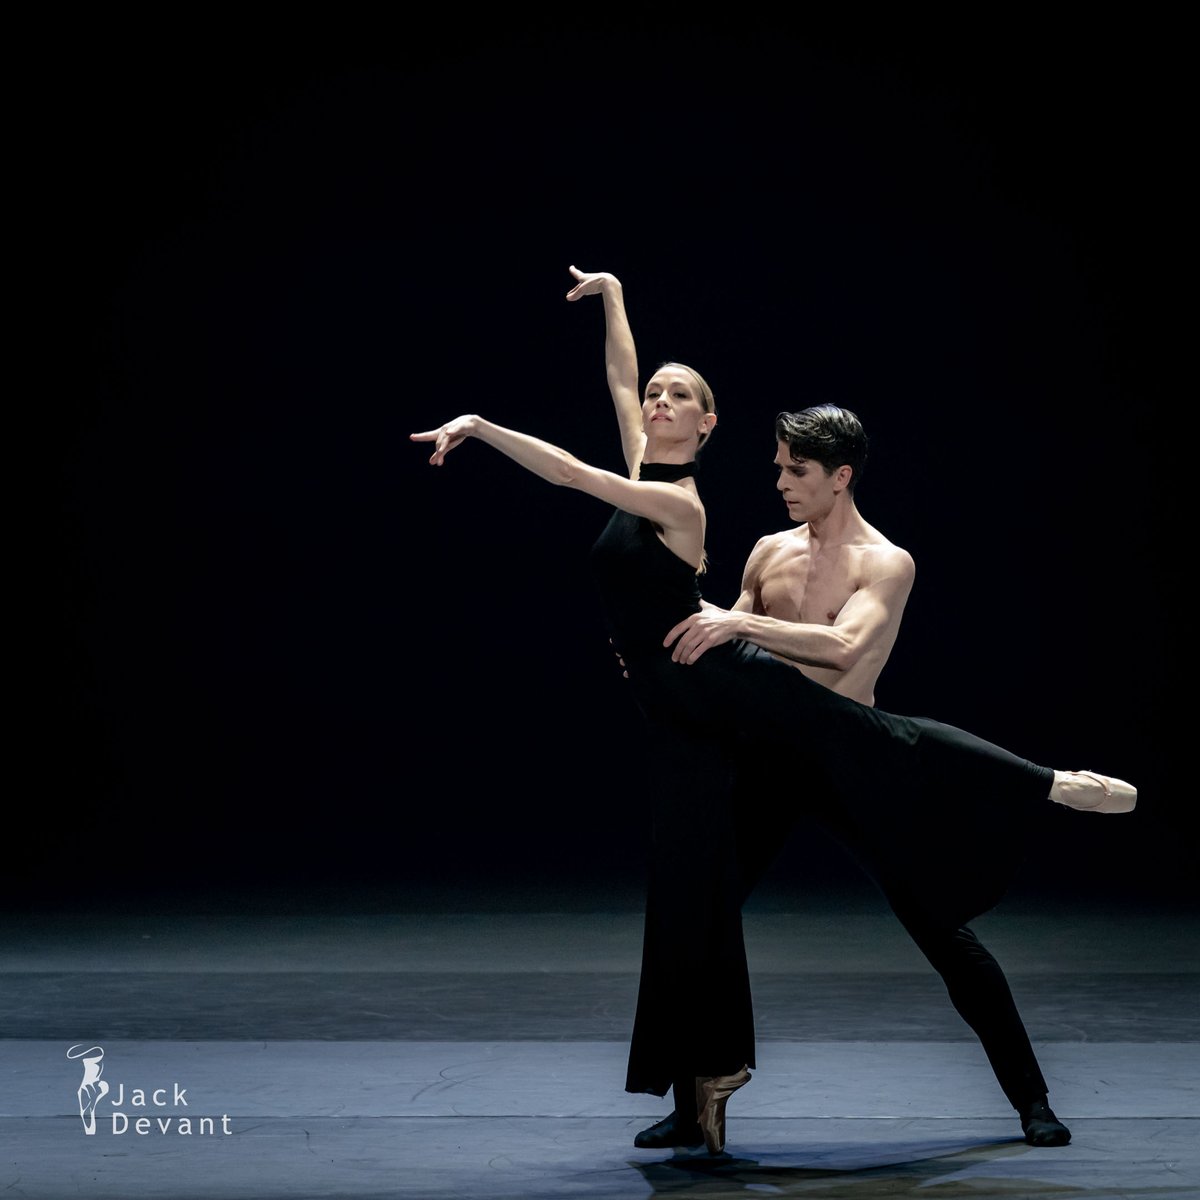 Eleonora Abbagnato and Sergio Bernal in Proximity or Closeness. Ballet Icons Gala 2024, London Coliseum, March 2024.
@EleonoraAbbagn @90Sergiobernal